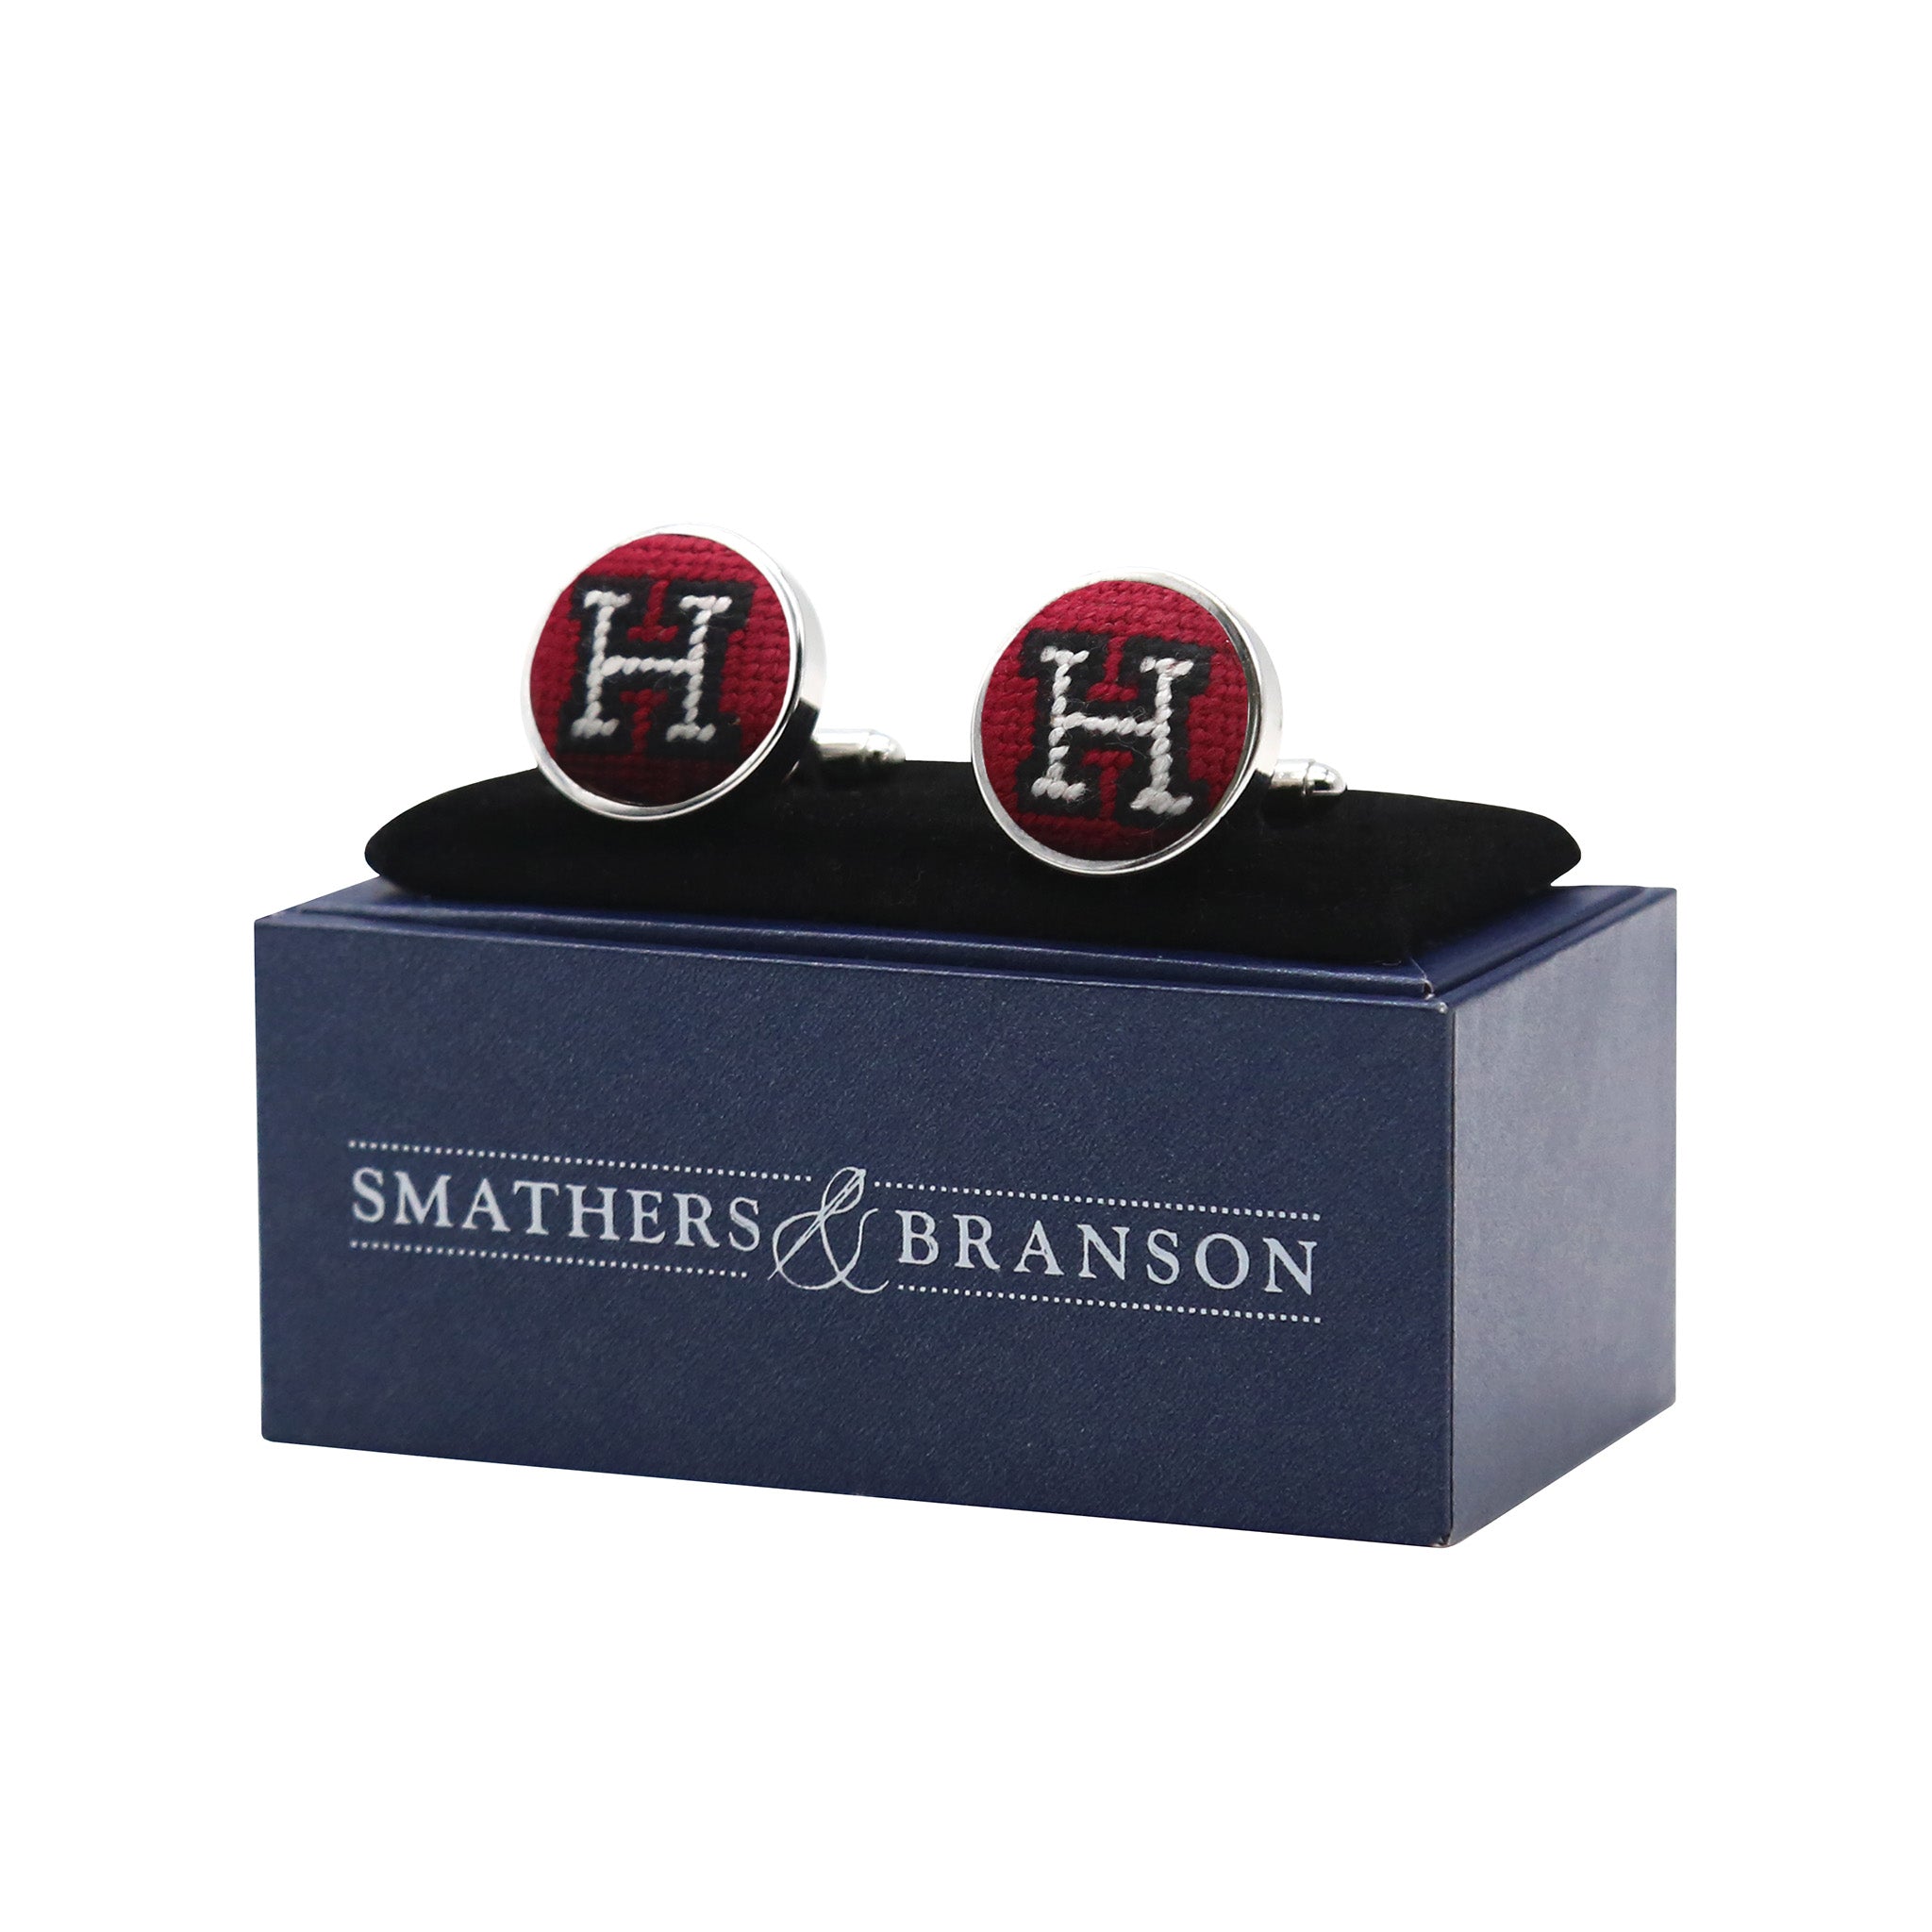 Smathers and Branson Cufflinks Box